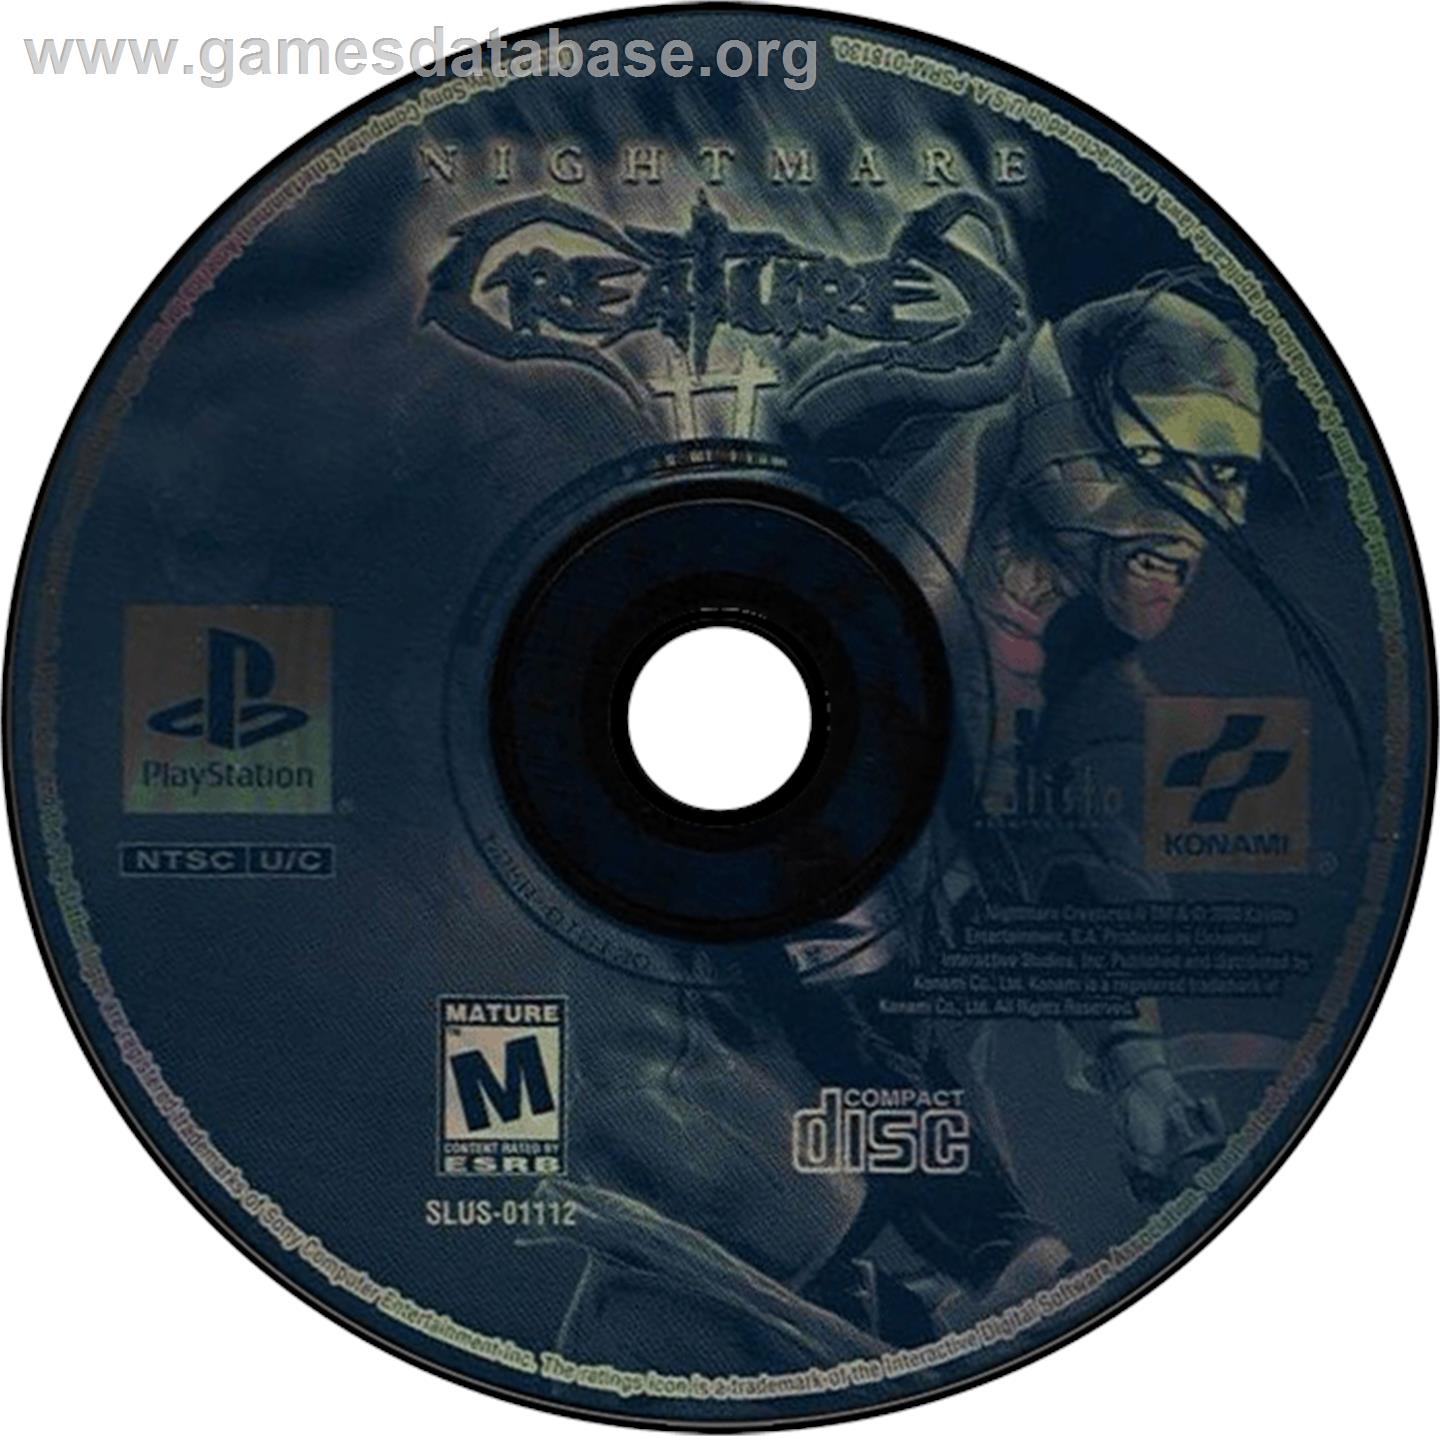 Nightmare Creatures II - Sony Playstation - Artwork - Disc